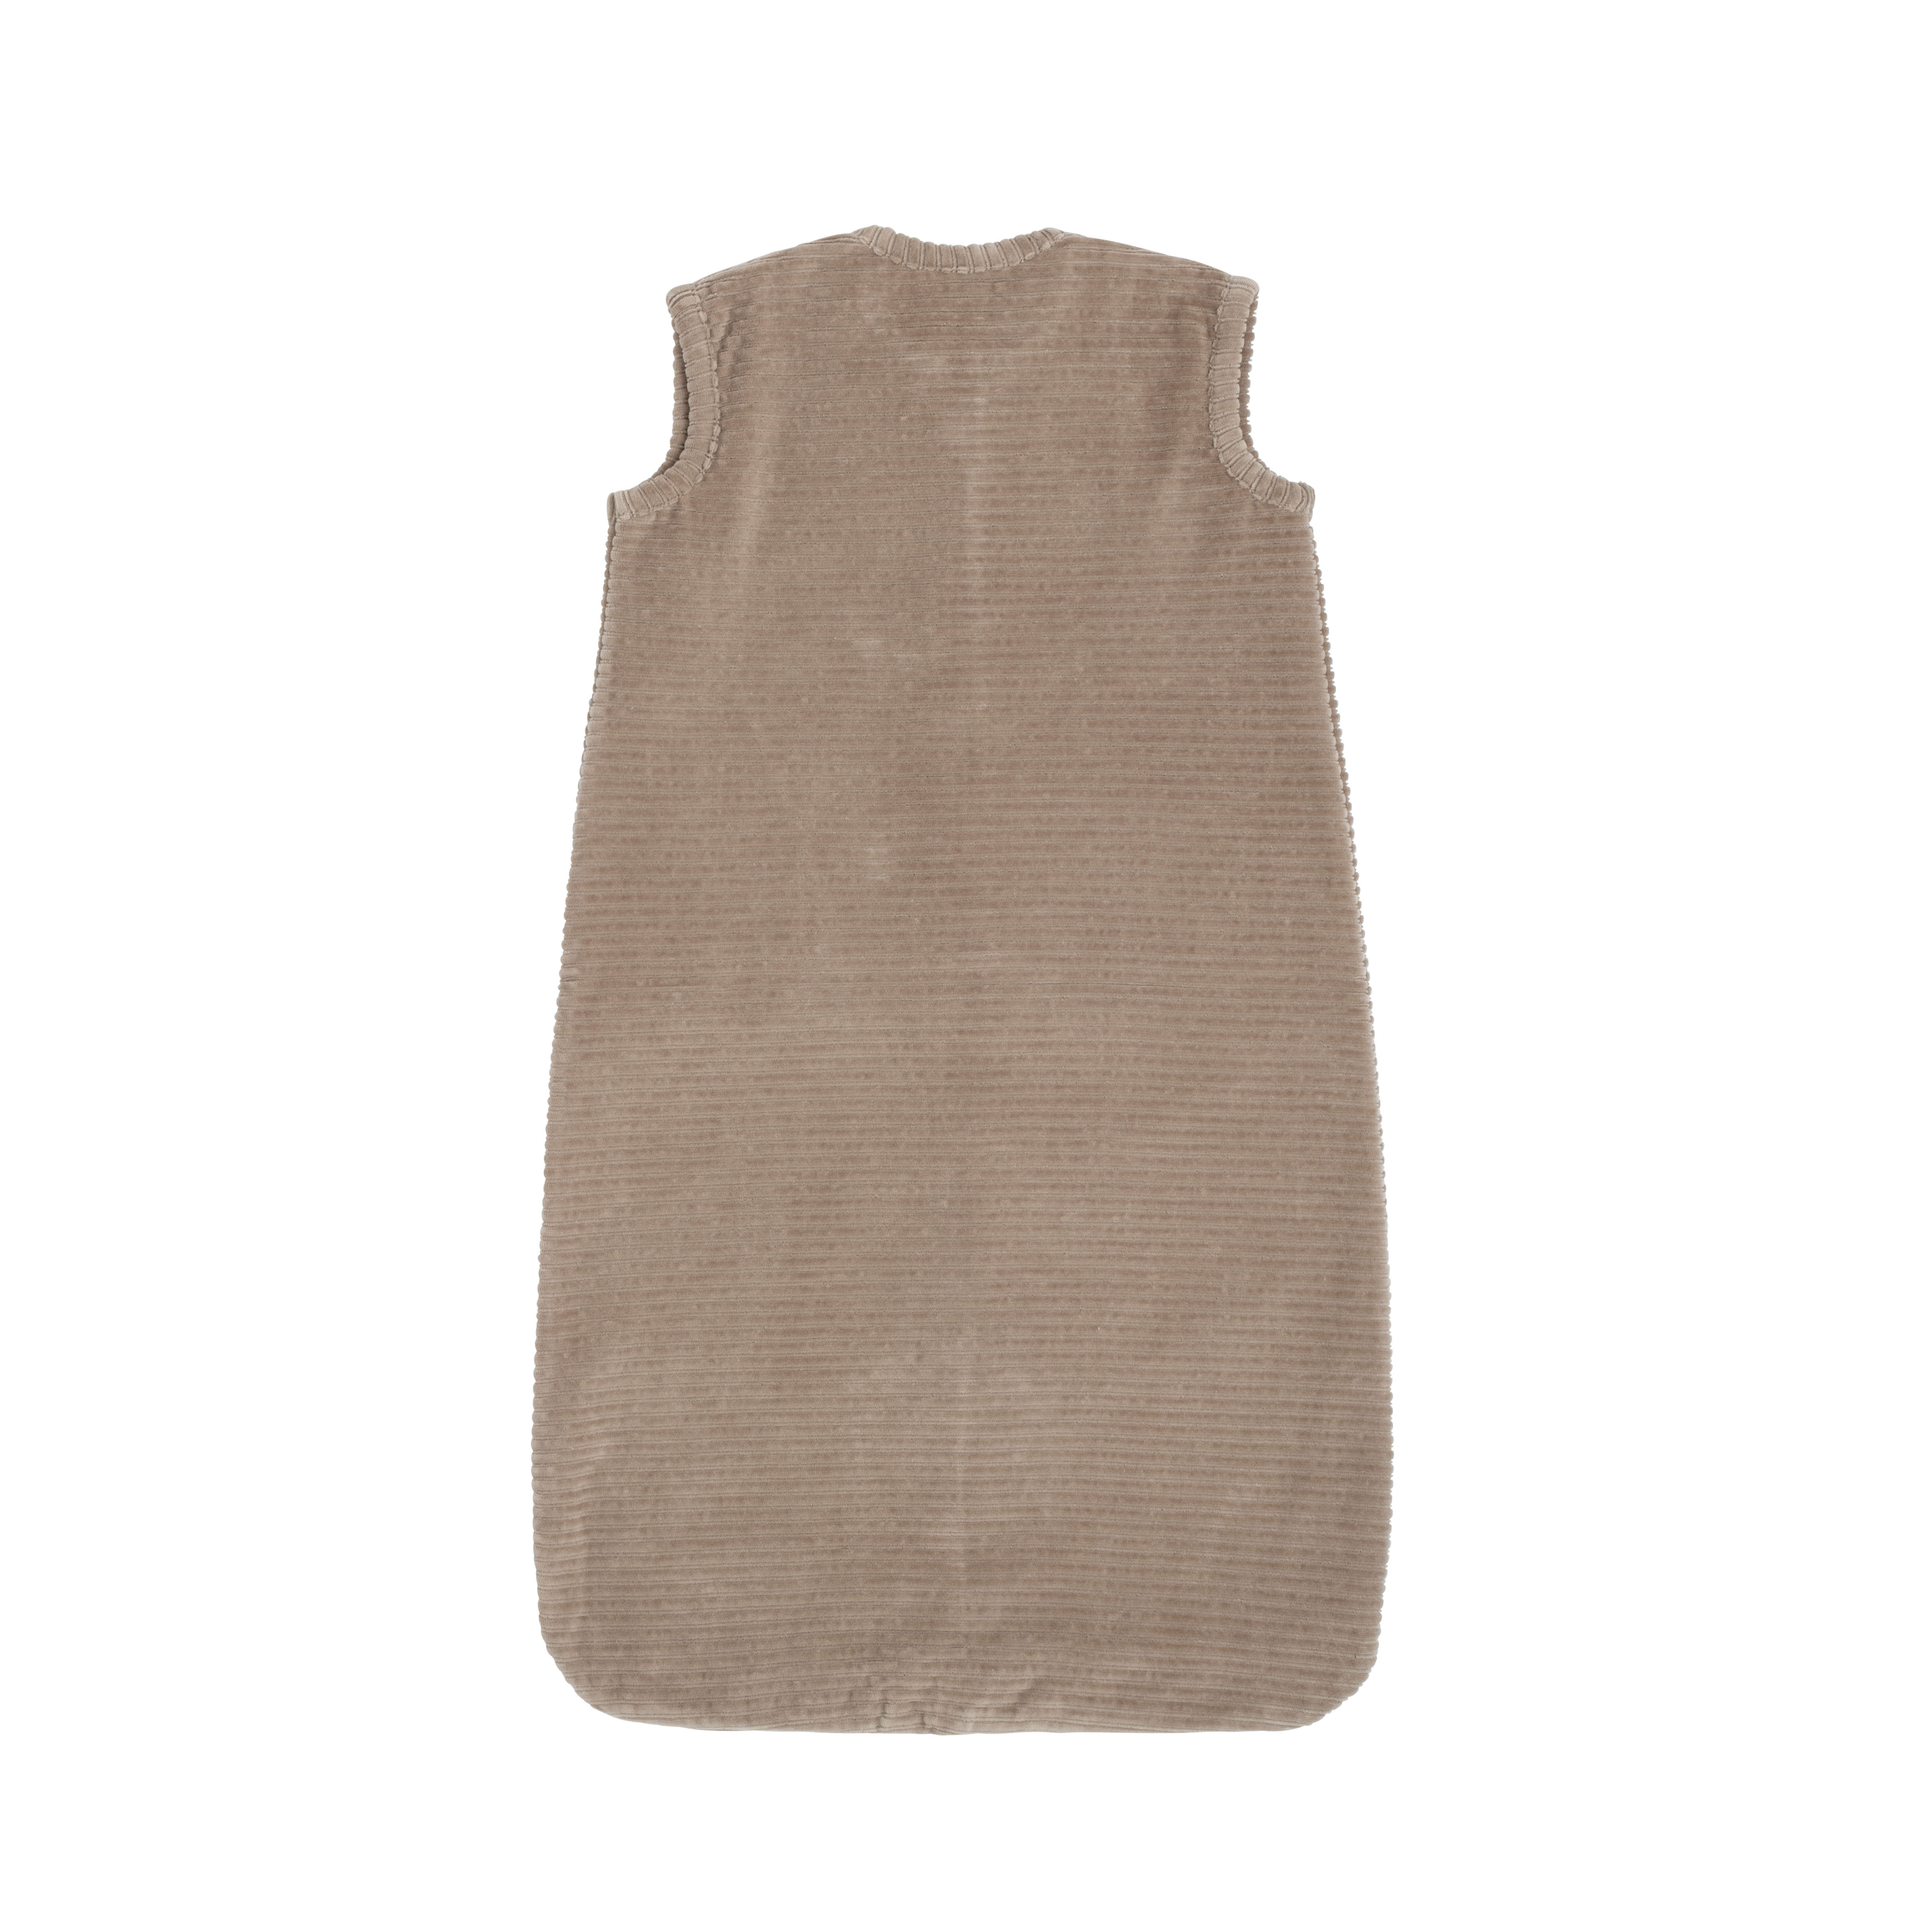 Sleeping bag Sense clay - 70 cm